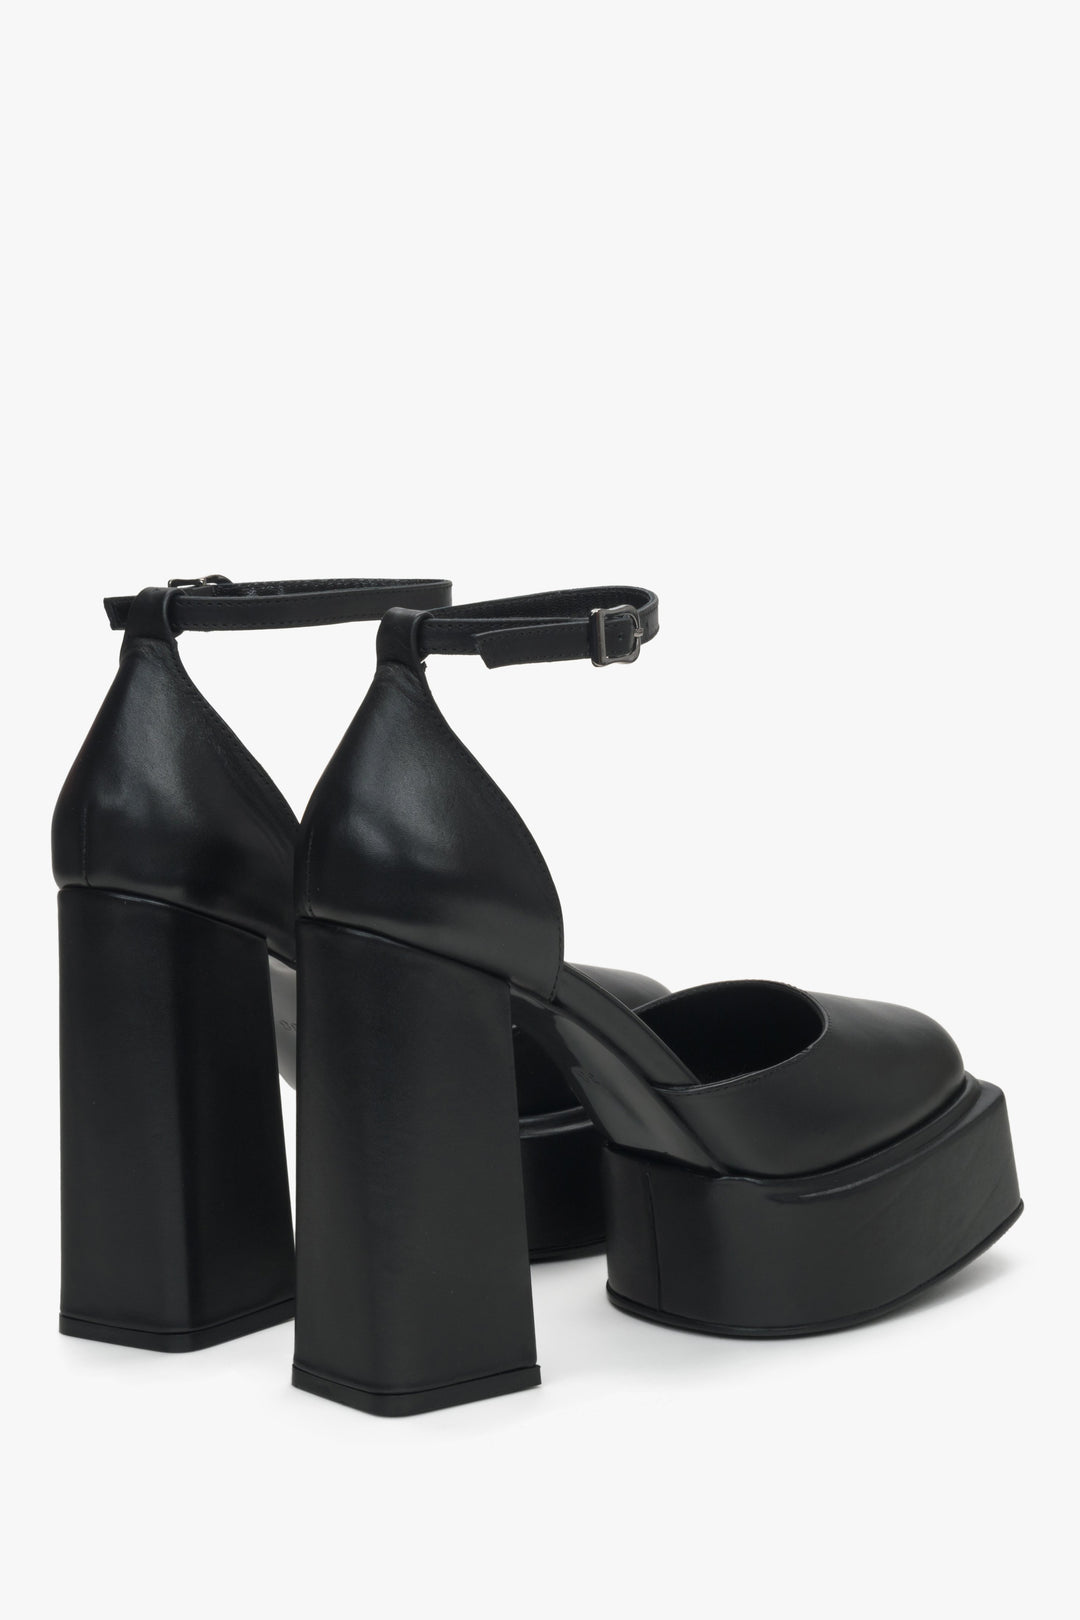 Women's black leather sandals Estro.